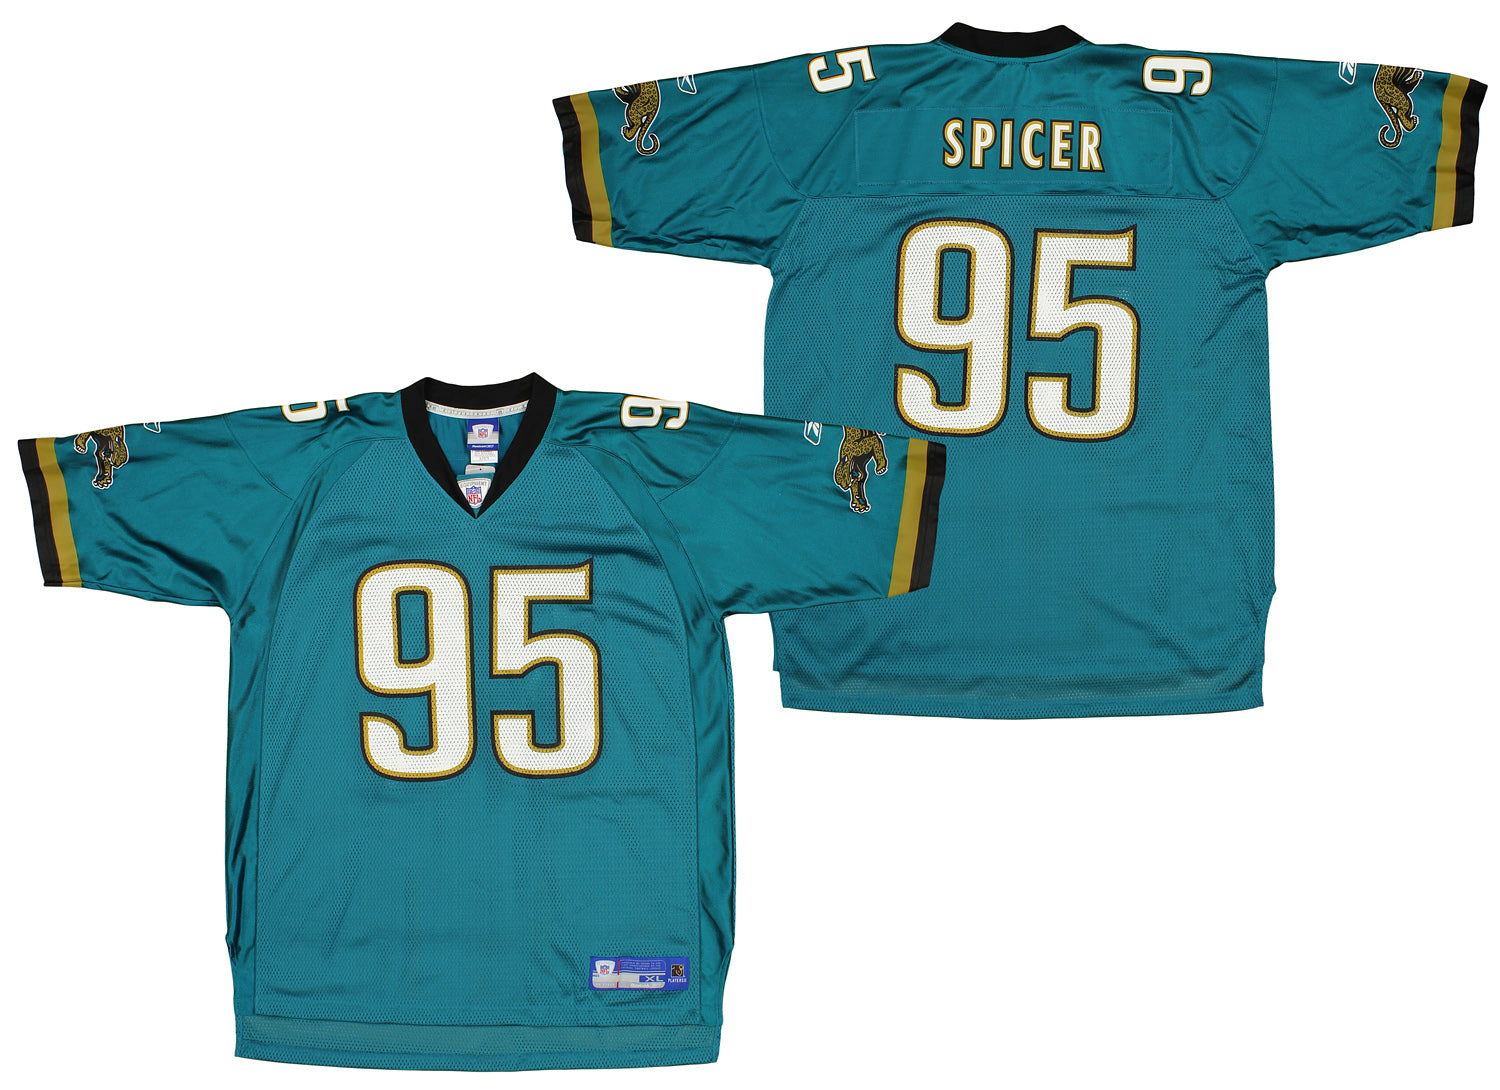 Reebok Jacksonville Jaguars Paul Spicer #95 NFL Men's Replica